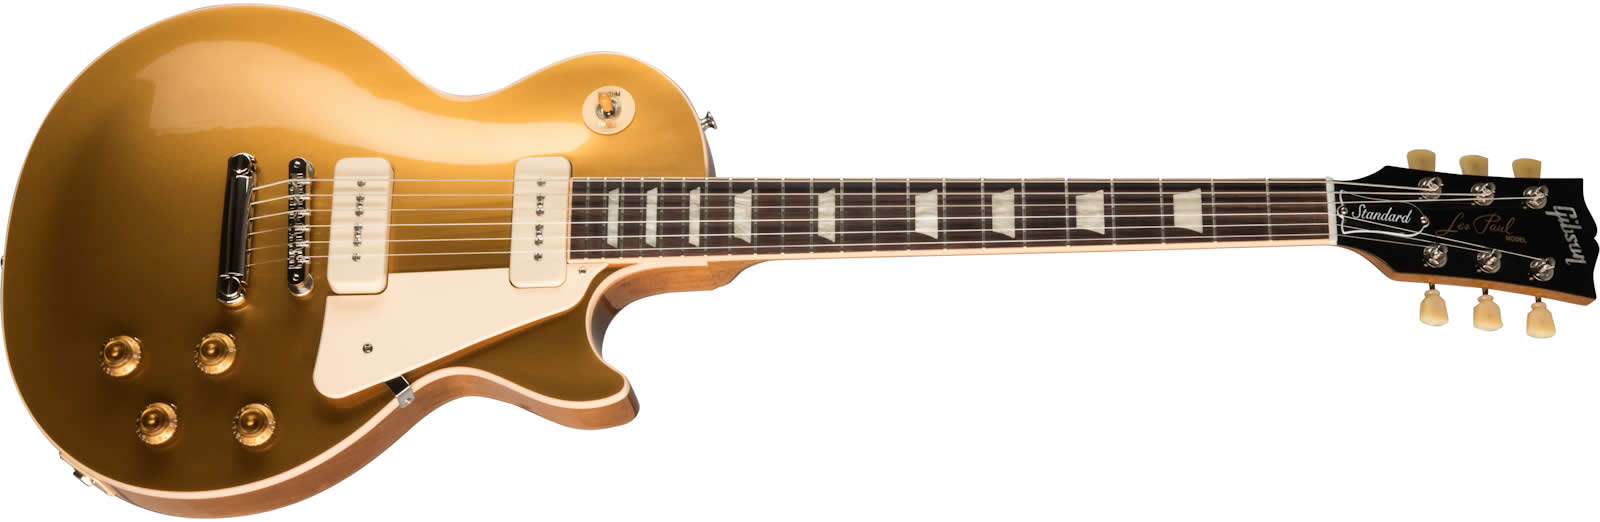 Gibson Les paul 60s tribute P-90